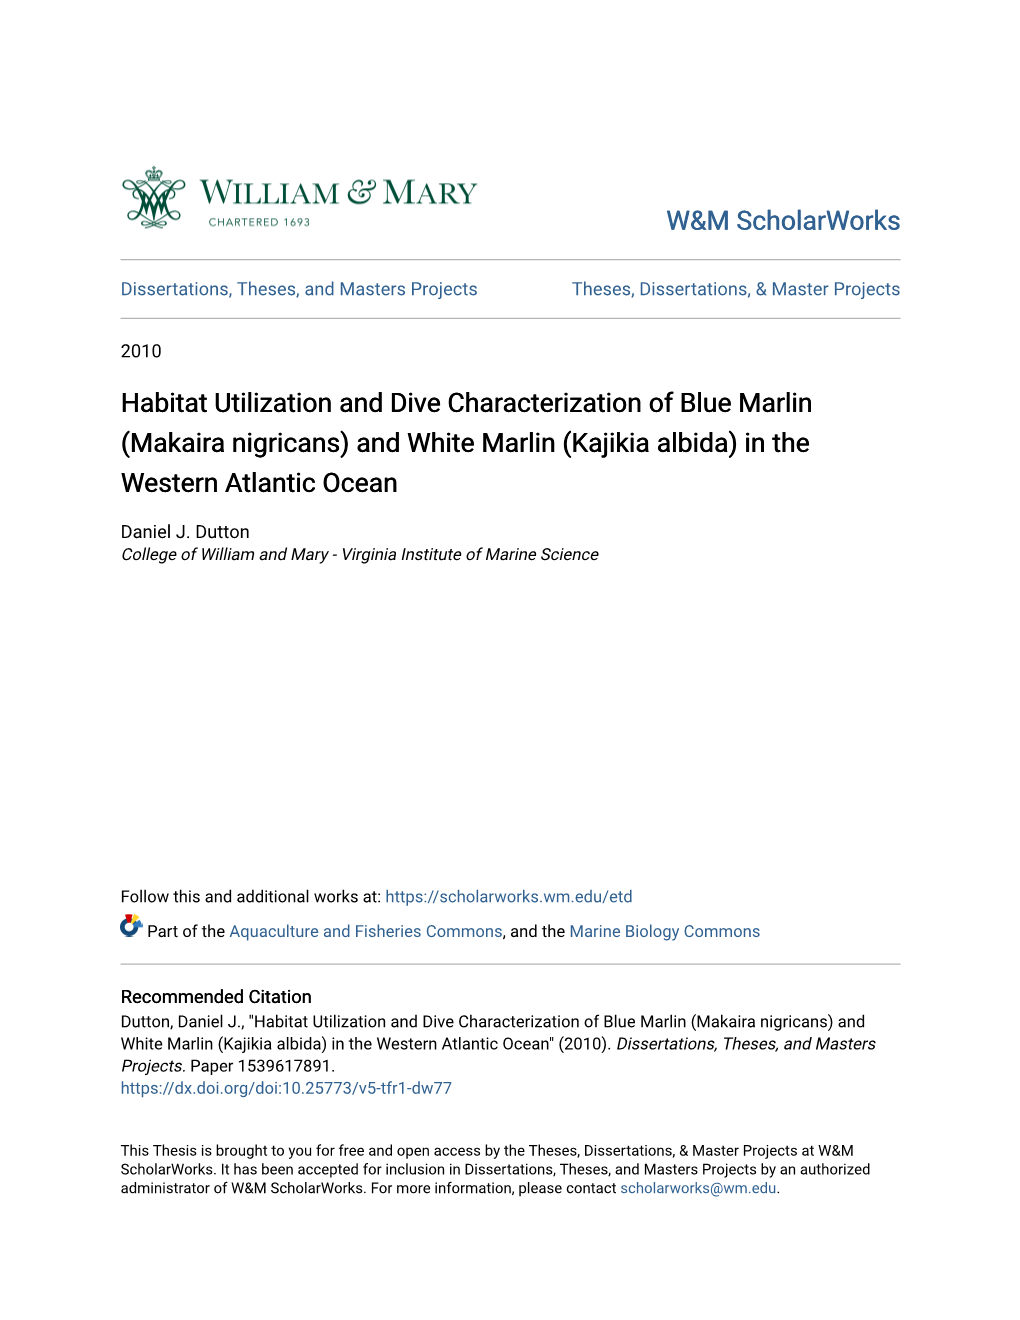 (Makaira Nigricans) and White Marlin (Kajikia Albida) in the Western Atlantic Ocean